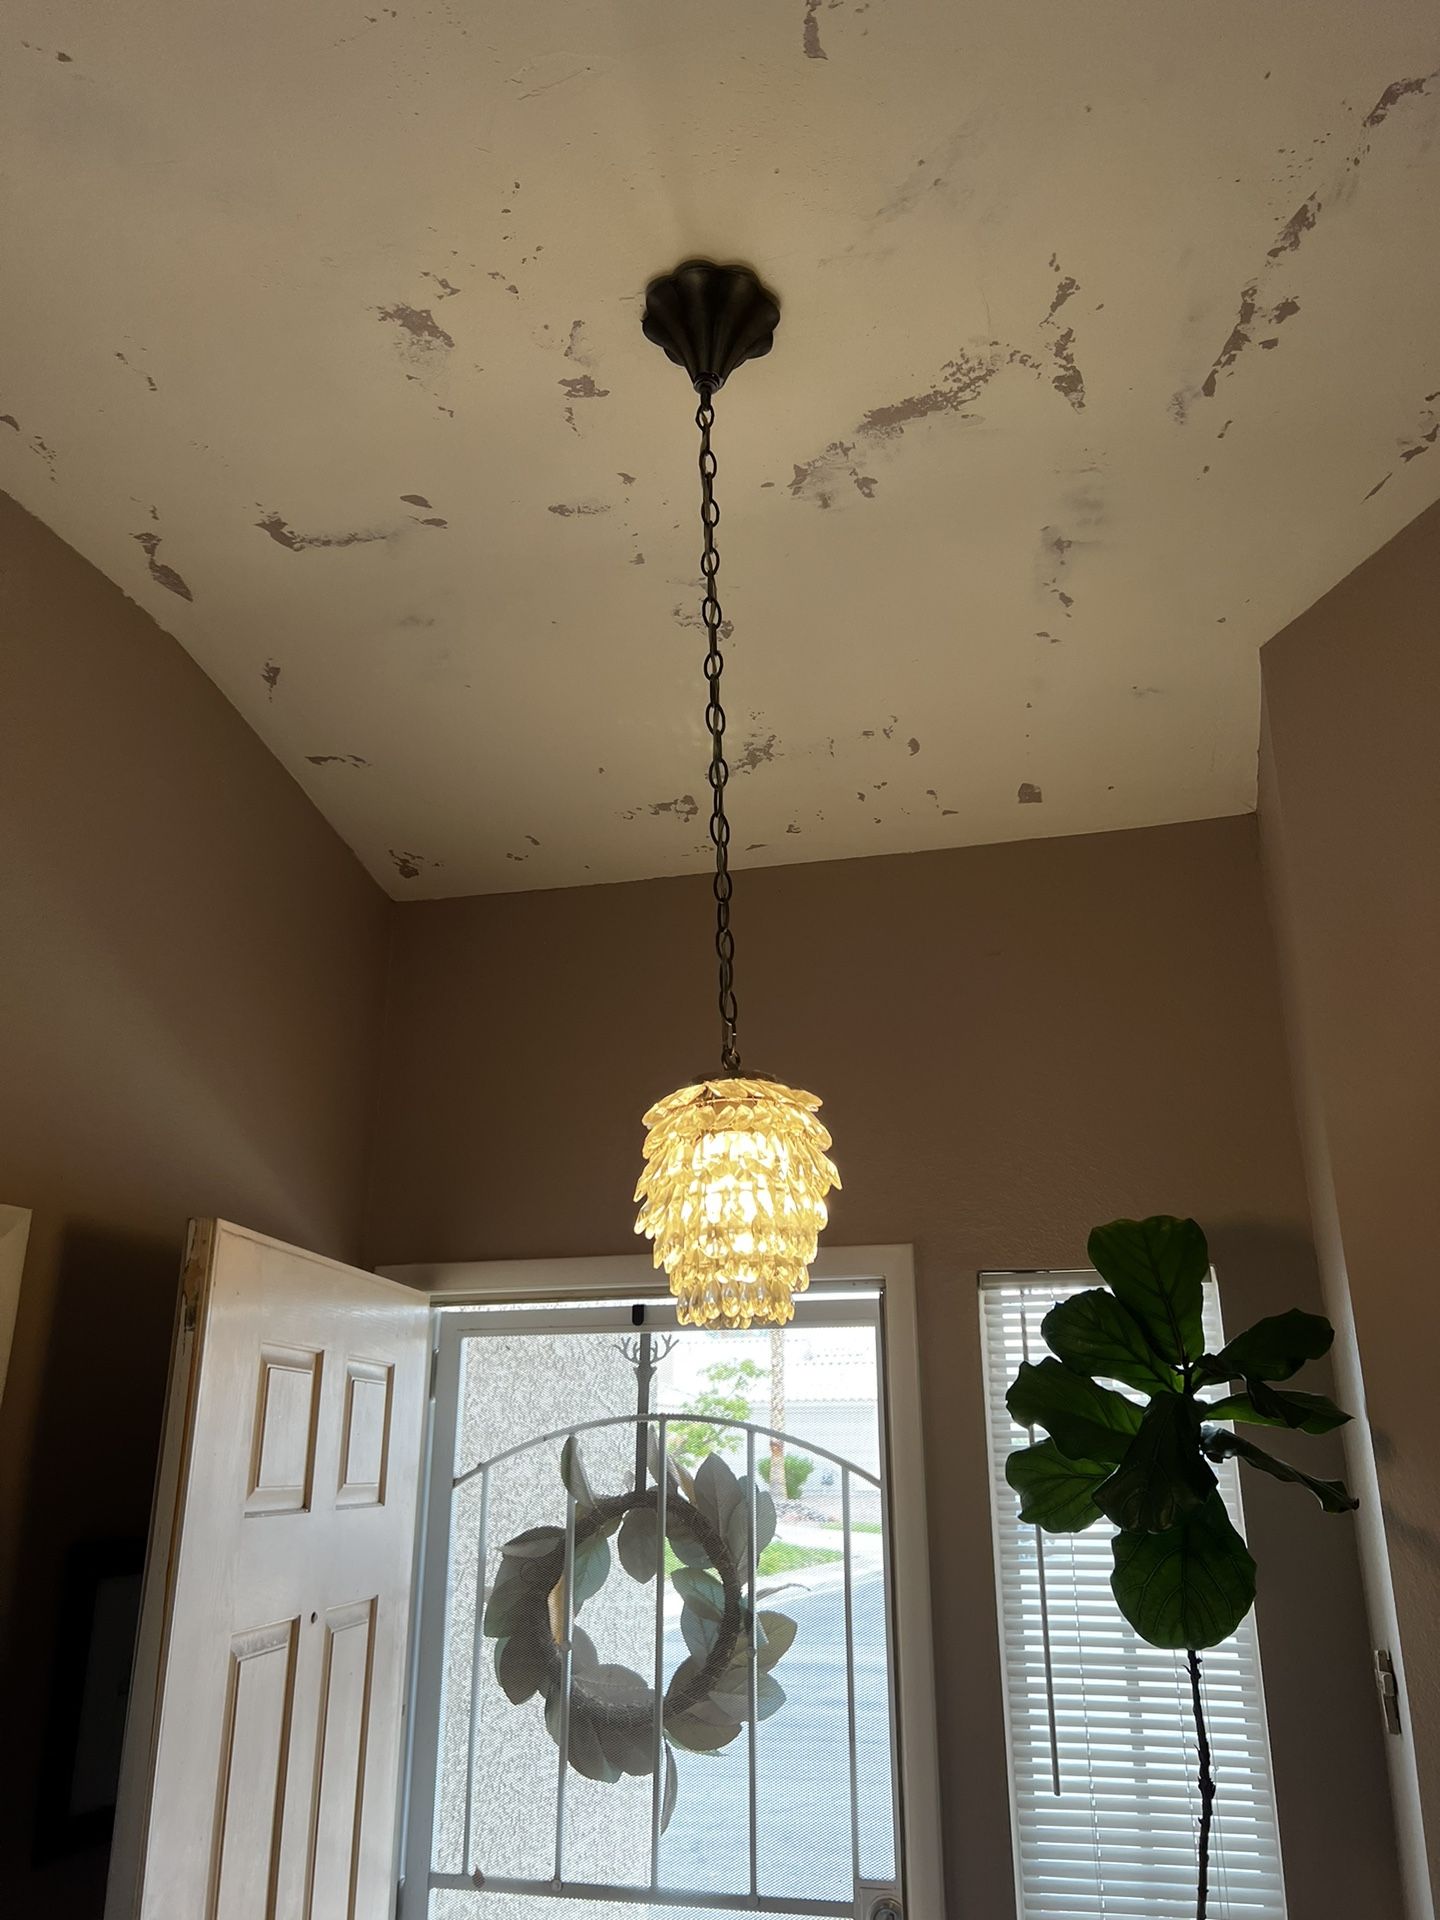 42” glass tiered chandelier